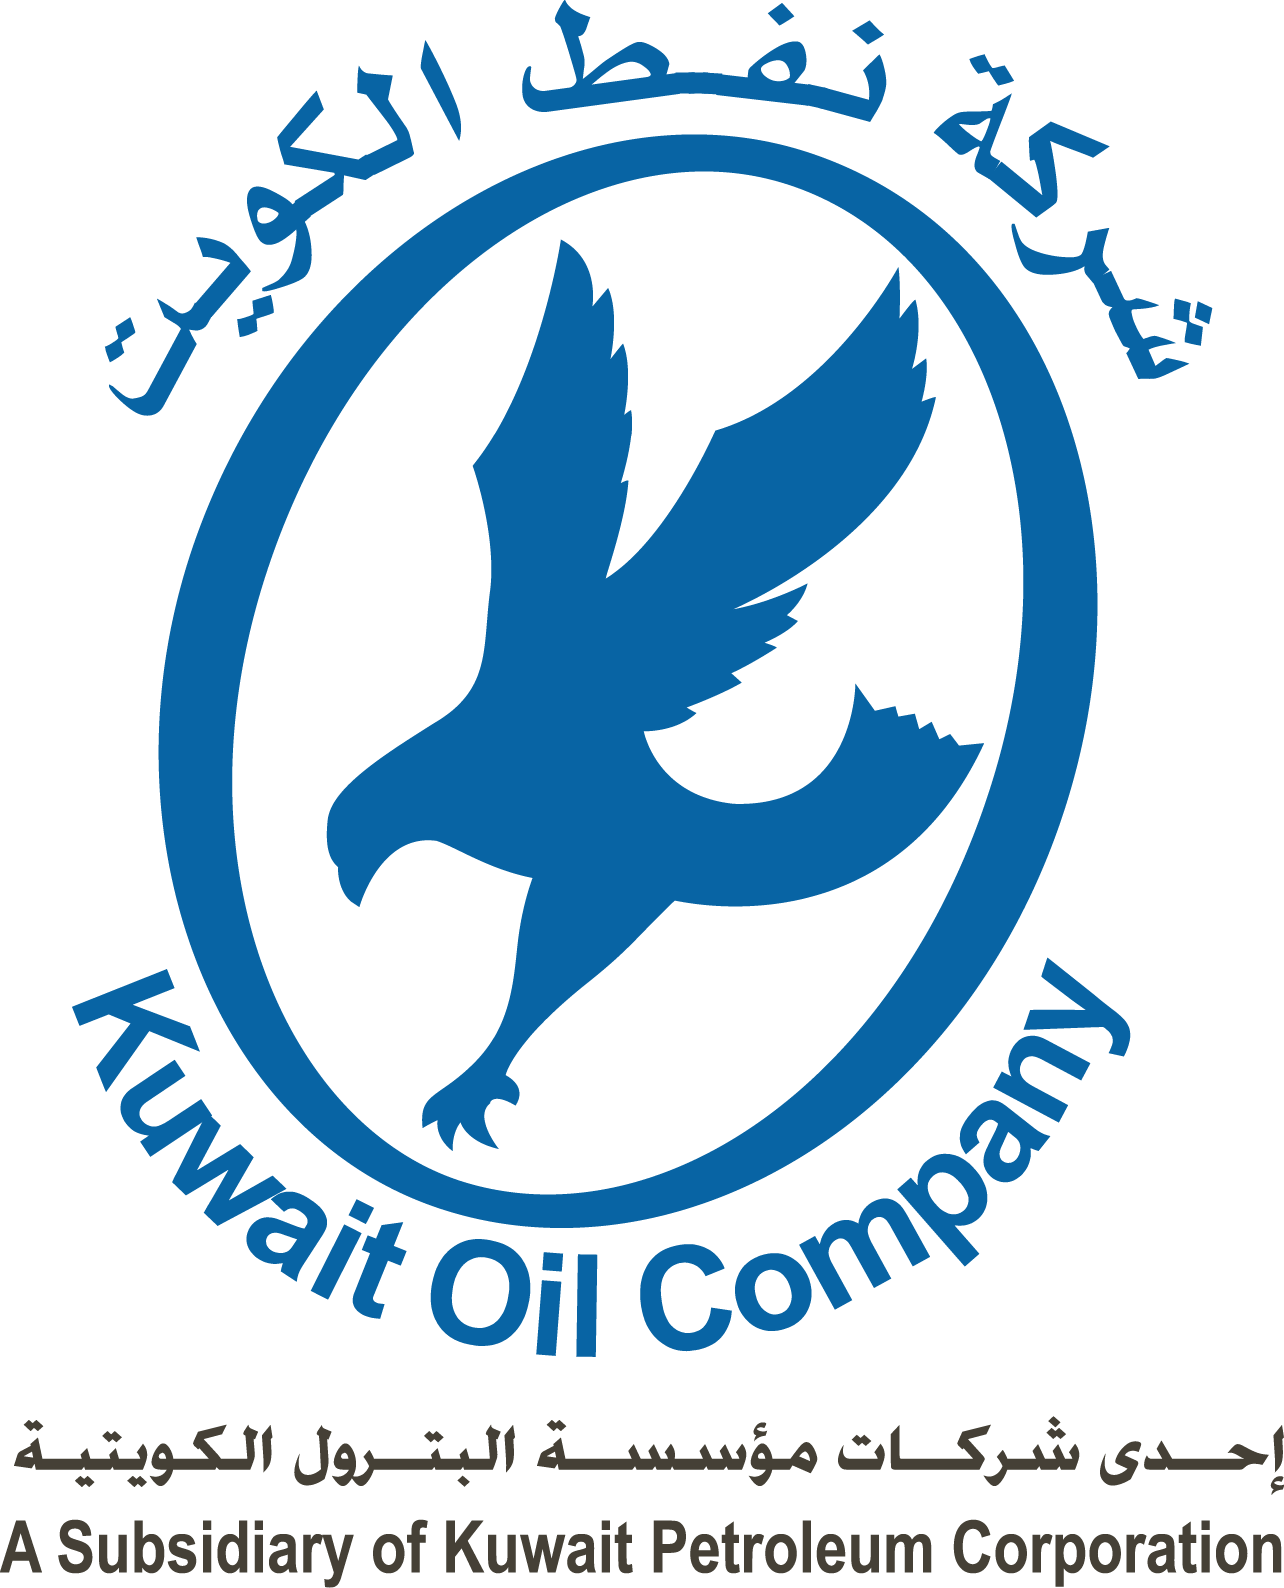 Oil Co Logo - File:KOC Logo for wikipedia.png - Wikimedia Commons